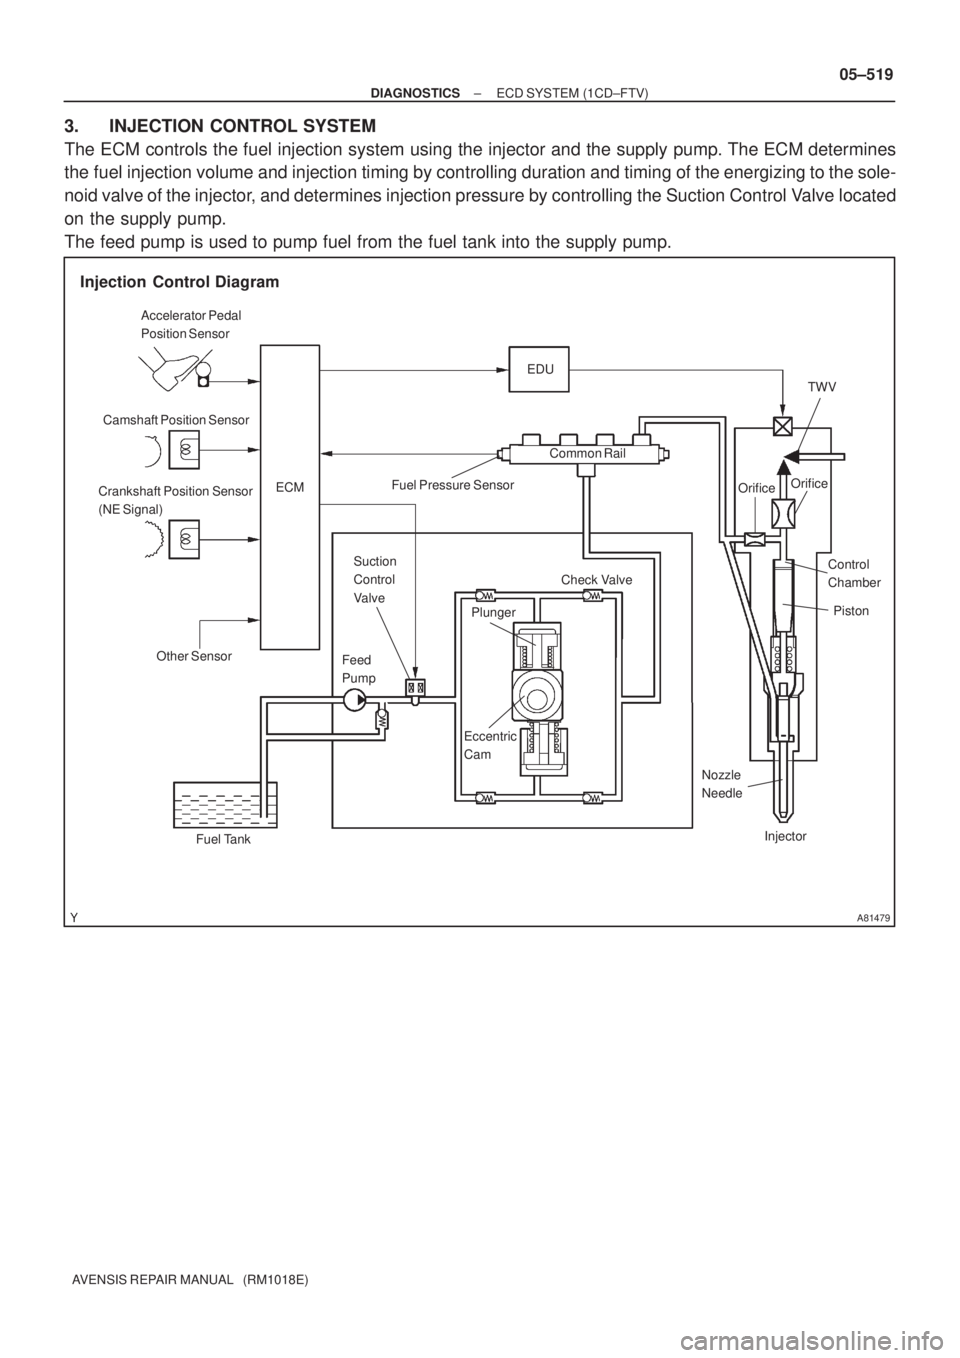 TOYOTA AVENSIS 2005  Service Repair Manual A81479
Injection  Control Diagram
Accelerator Pedal 
Position Sensor
Camshaft Position Sensor
Crankshaft Position Sensor 
(NE Signal)
Other Sensor
Fuel TankFeed 
Pump
Eccentric 
CamPlungerCheck Valve 